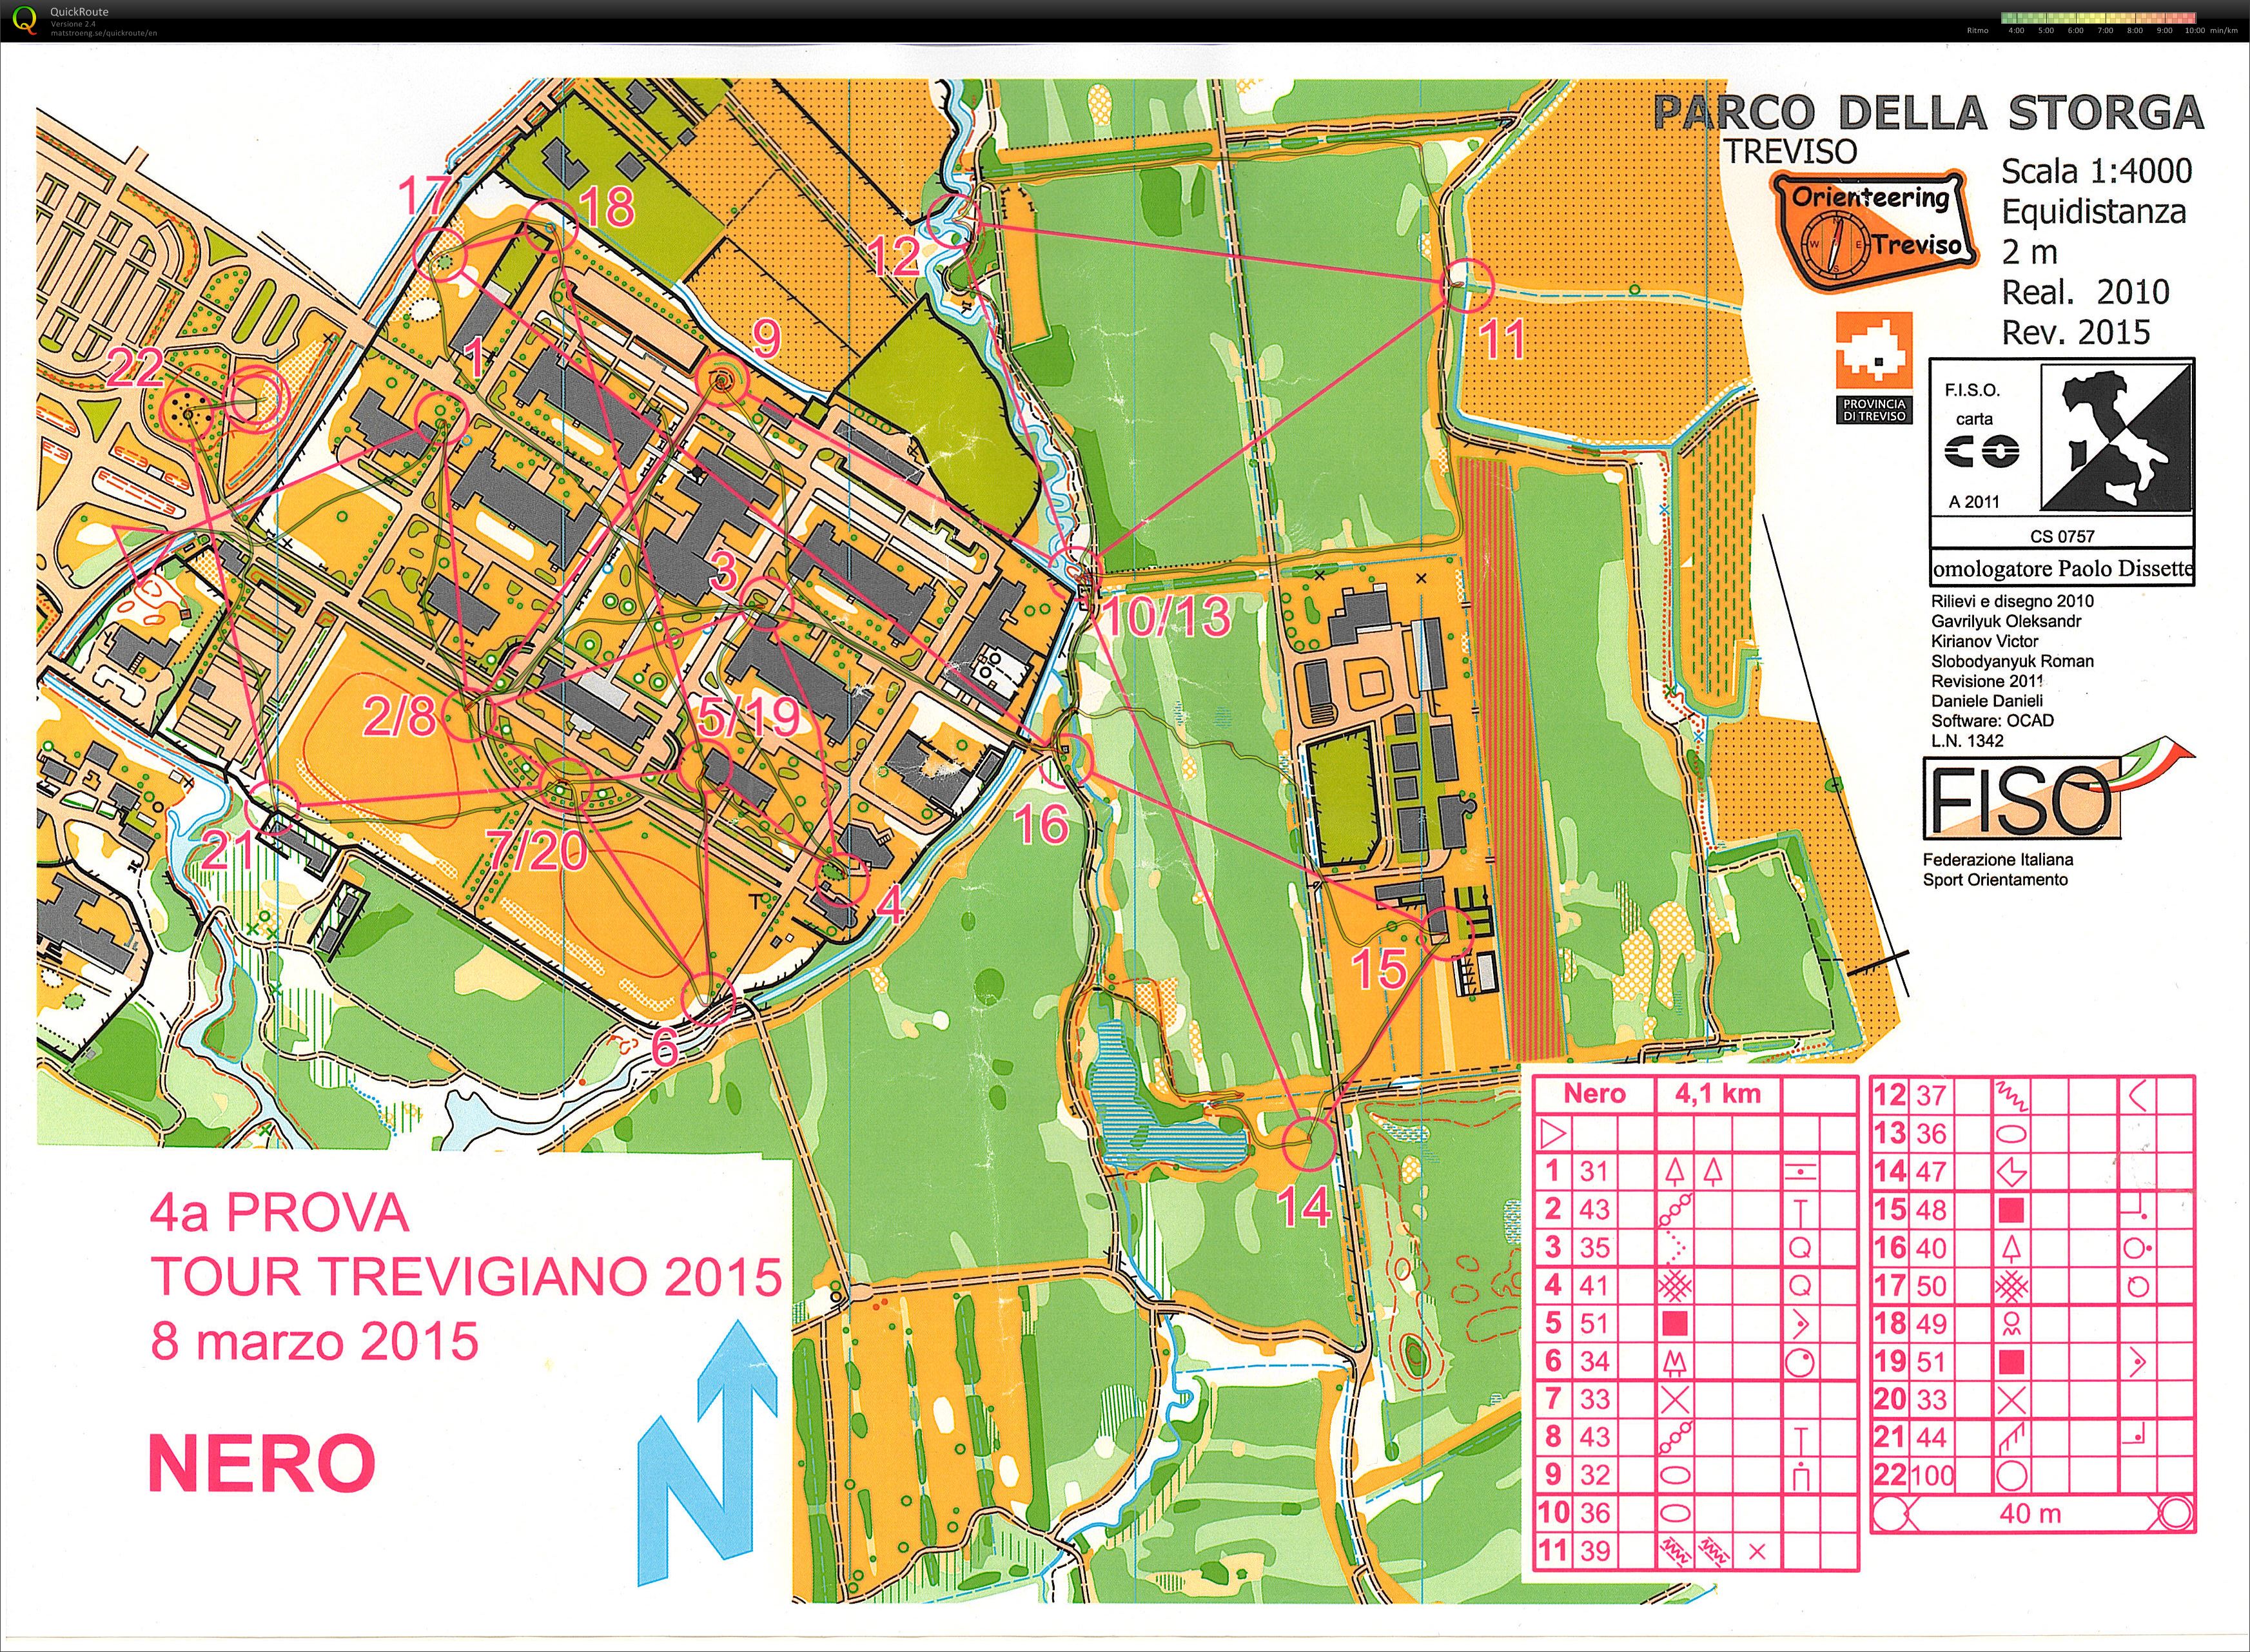 4a prova Tour Trevigiano 2015 (08.03.2015)